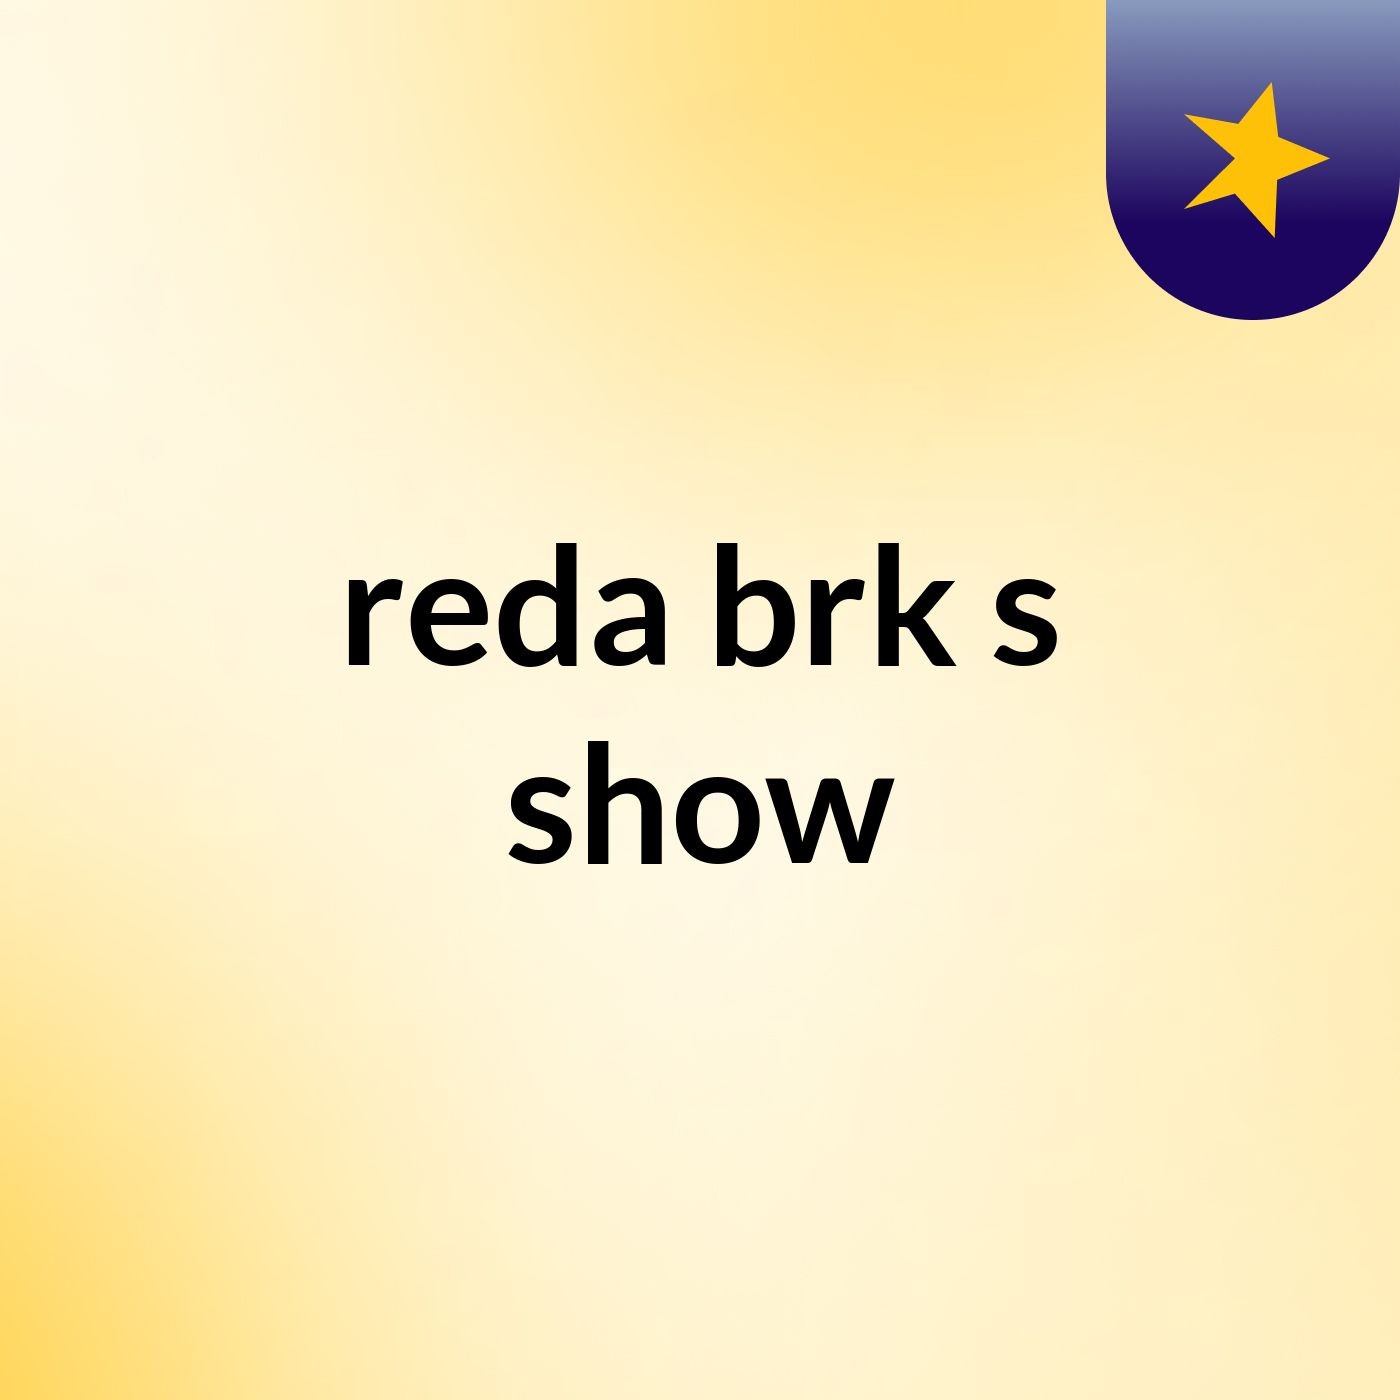 reda brk's show